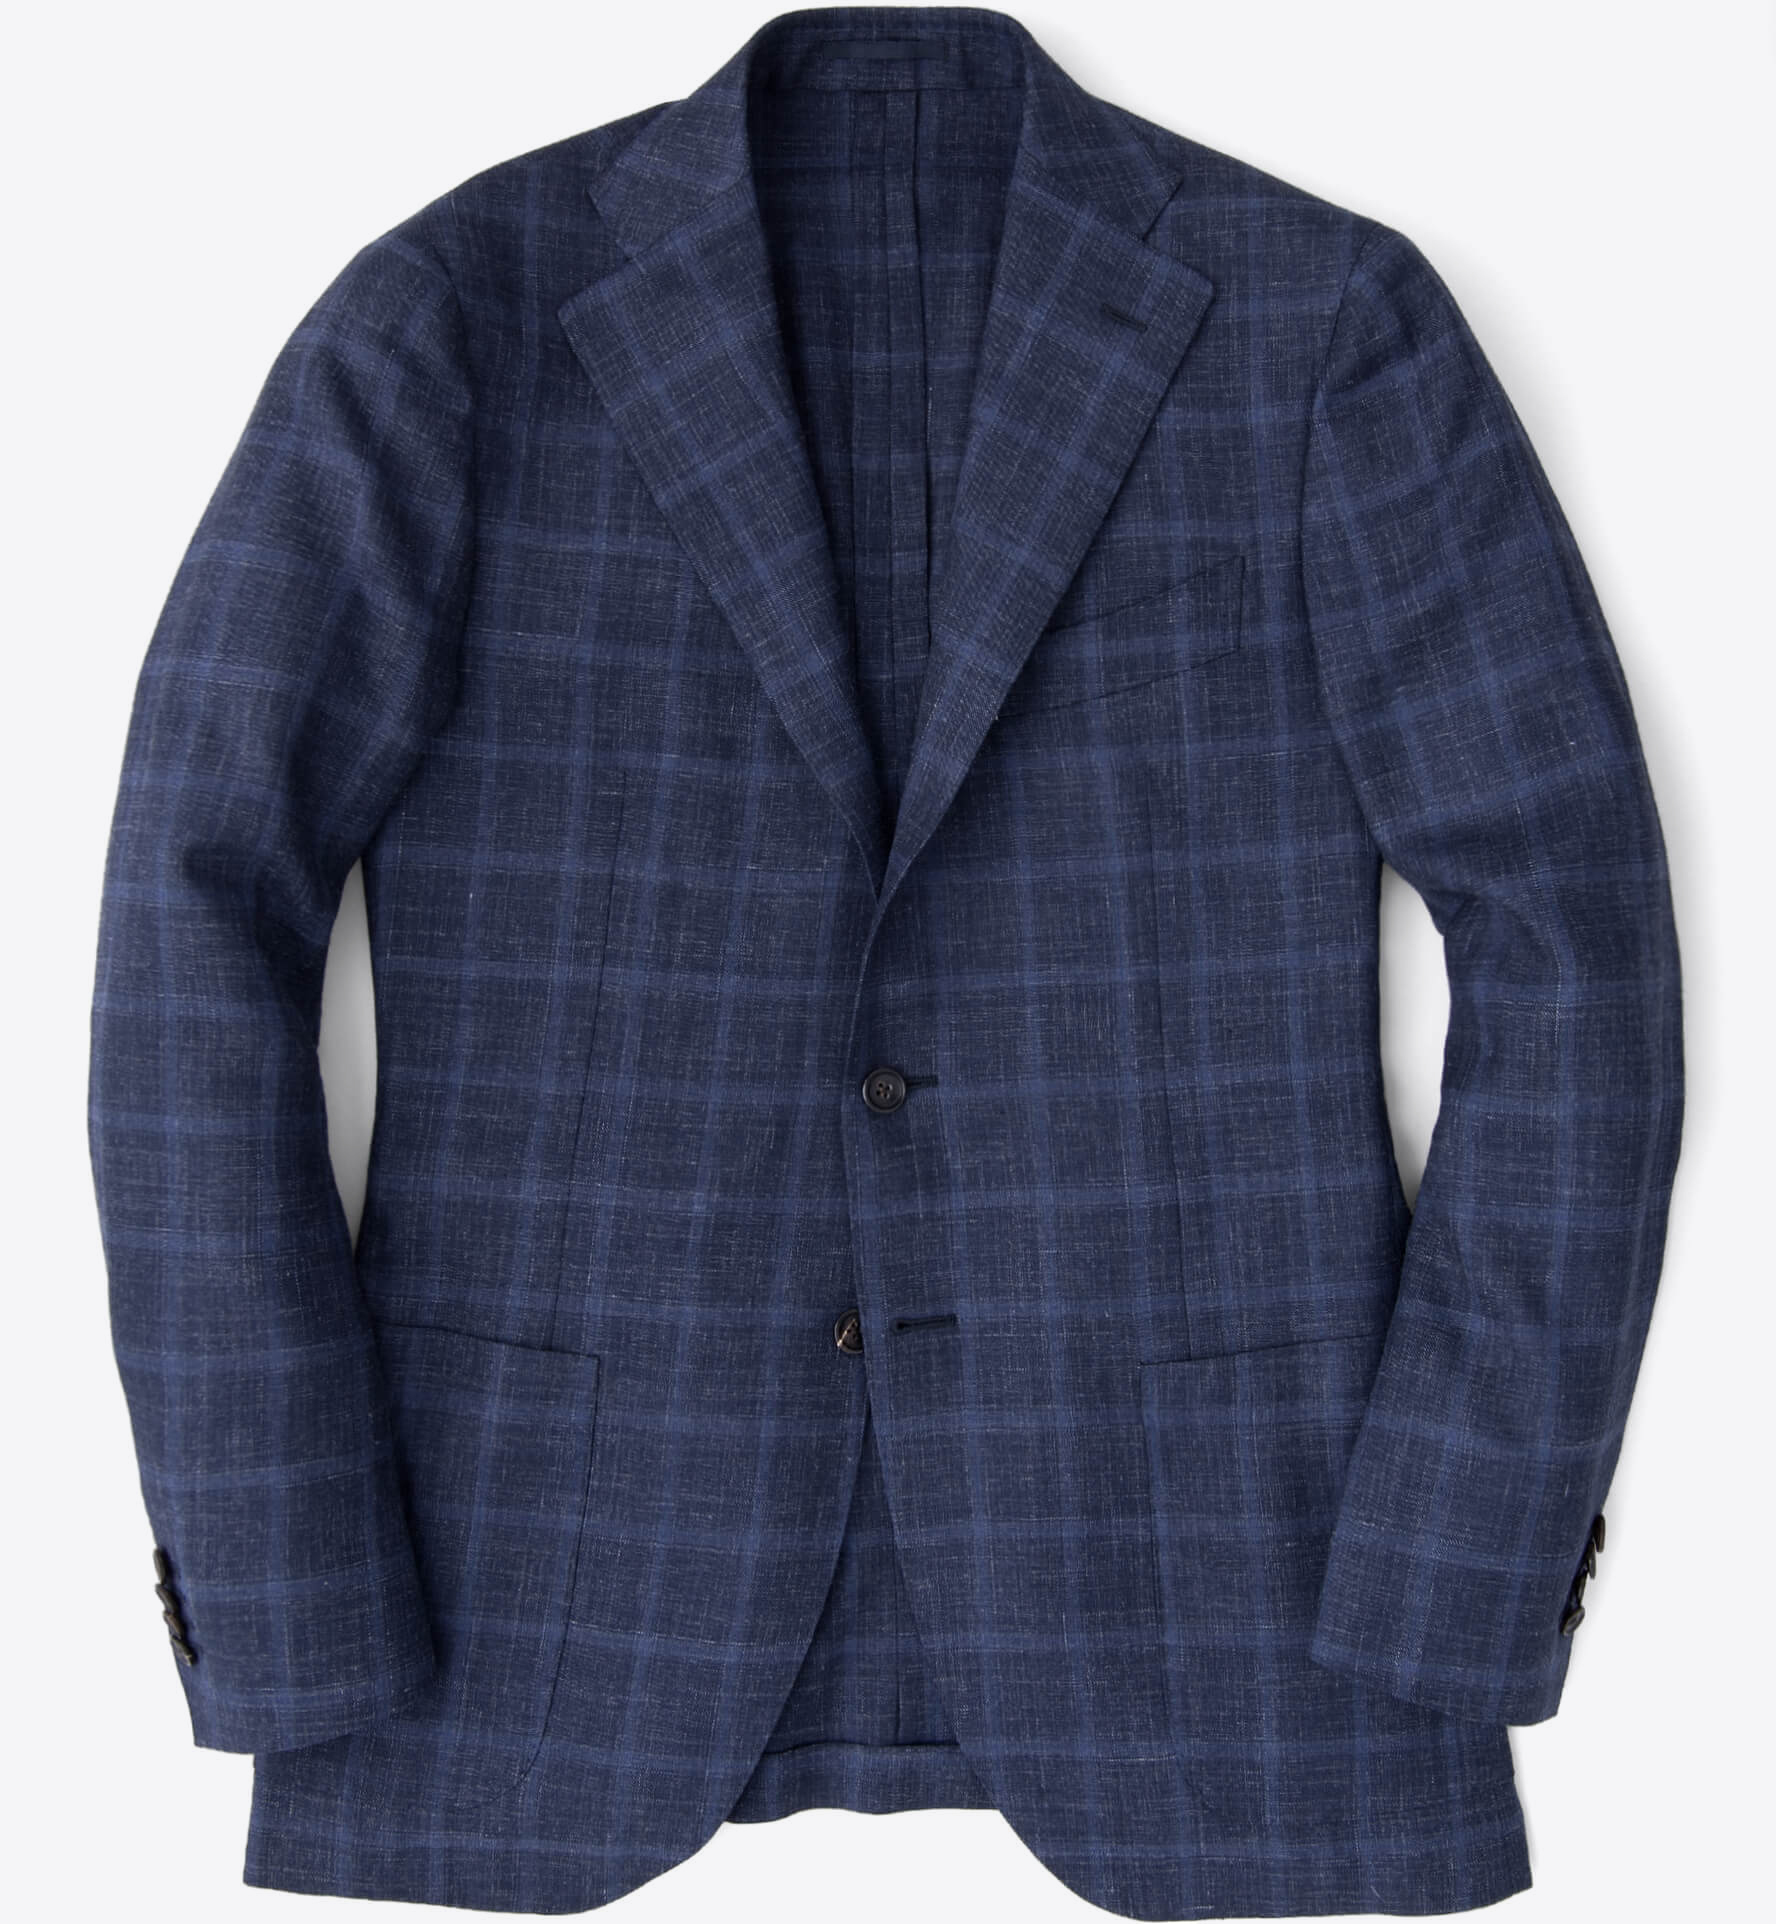 Hudson Navy Windowpane Summer Twill Jacket by Proper Cloth